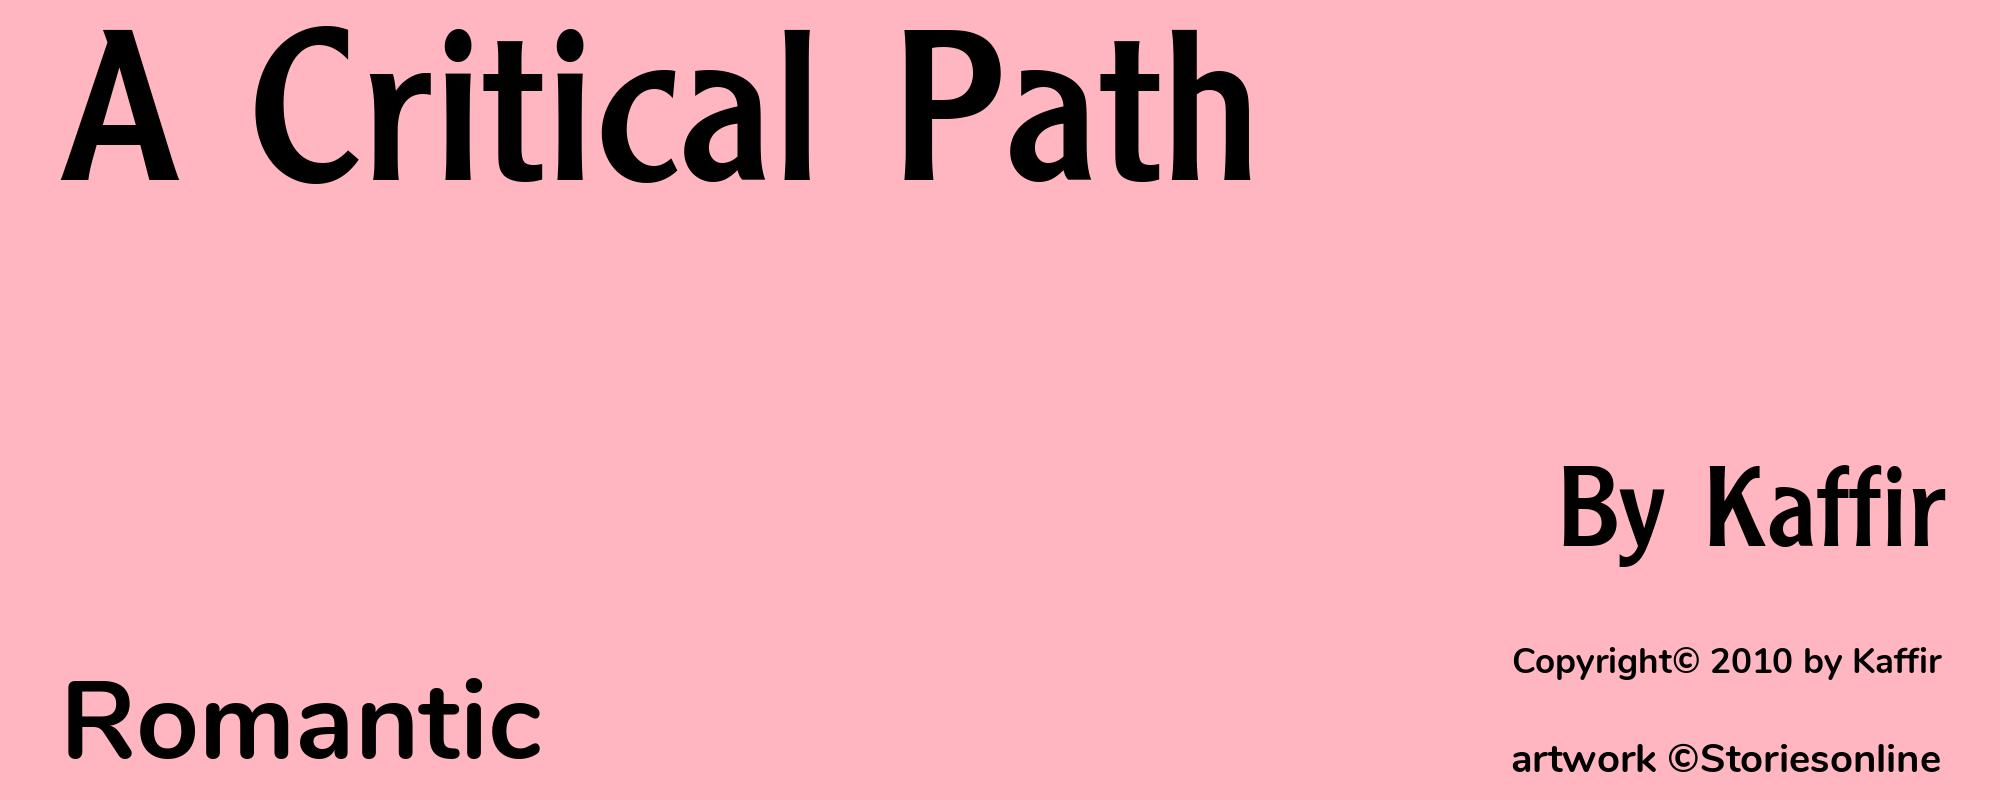 A Critical Path - Cover